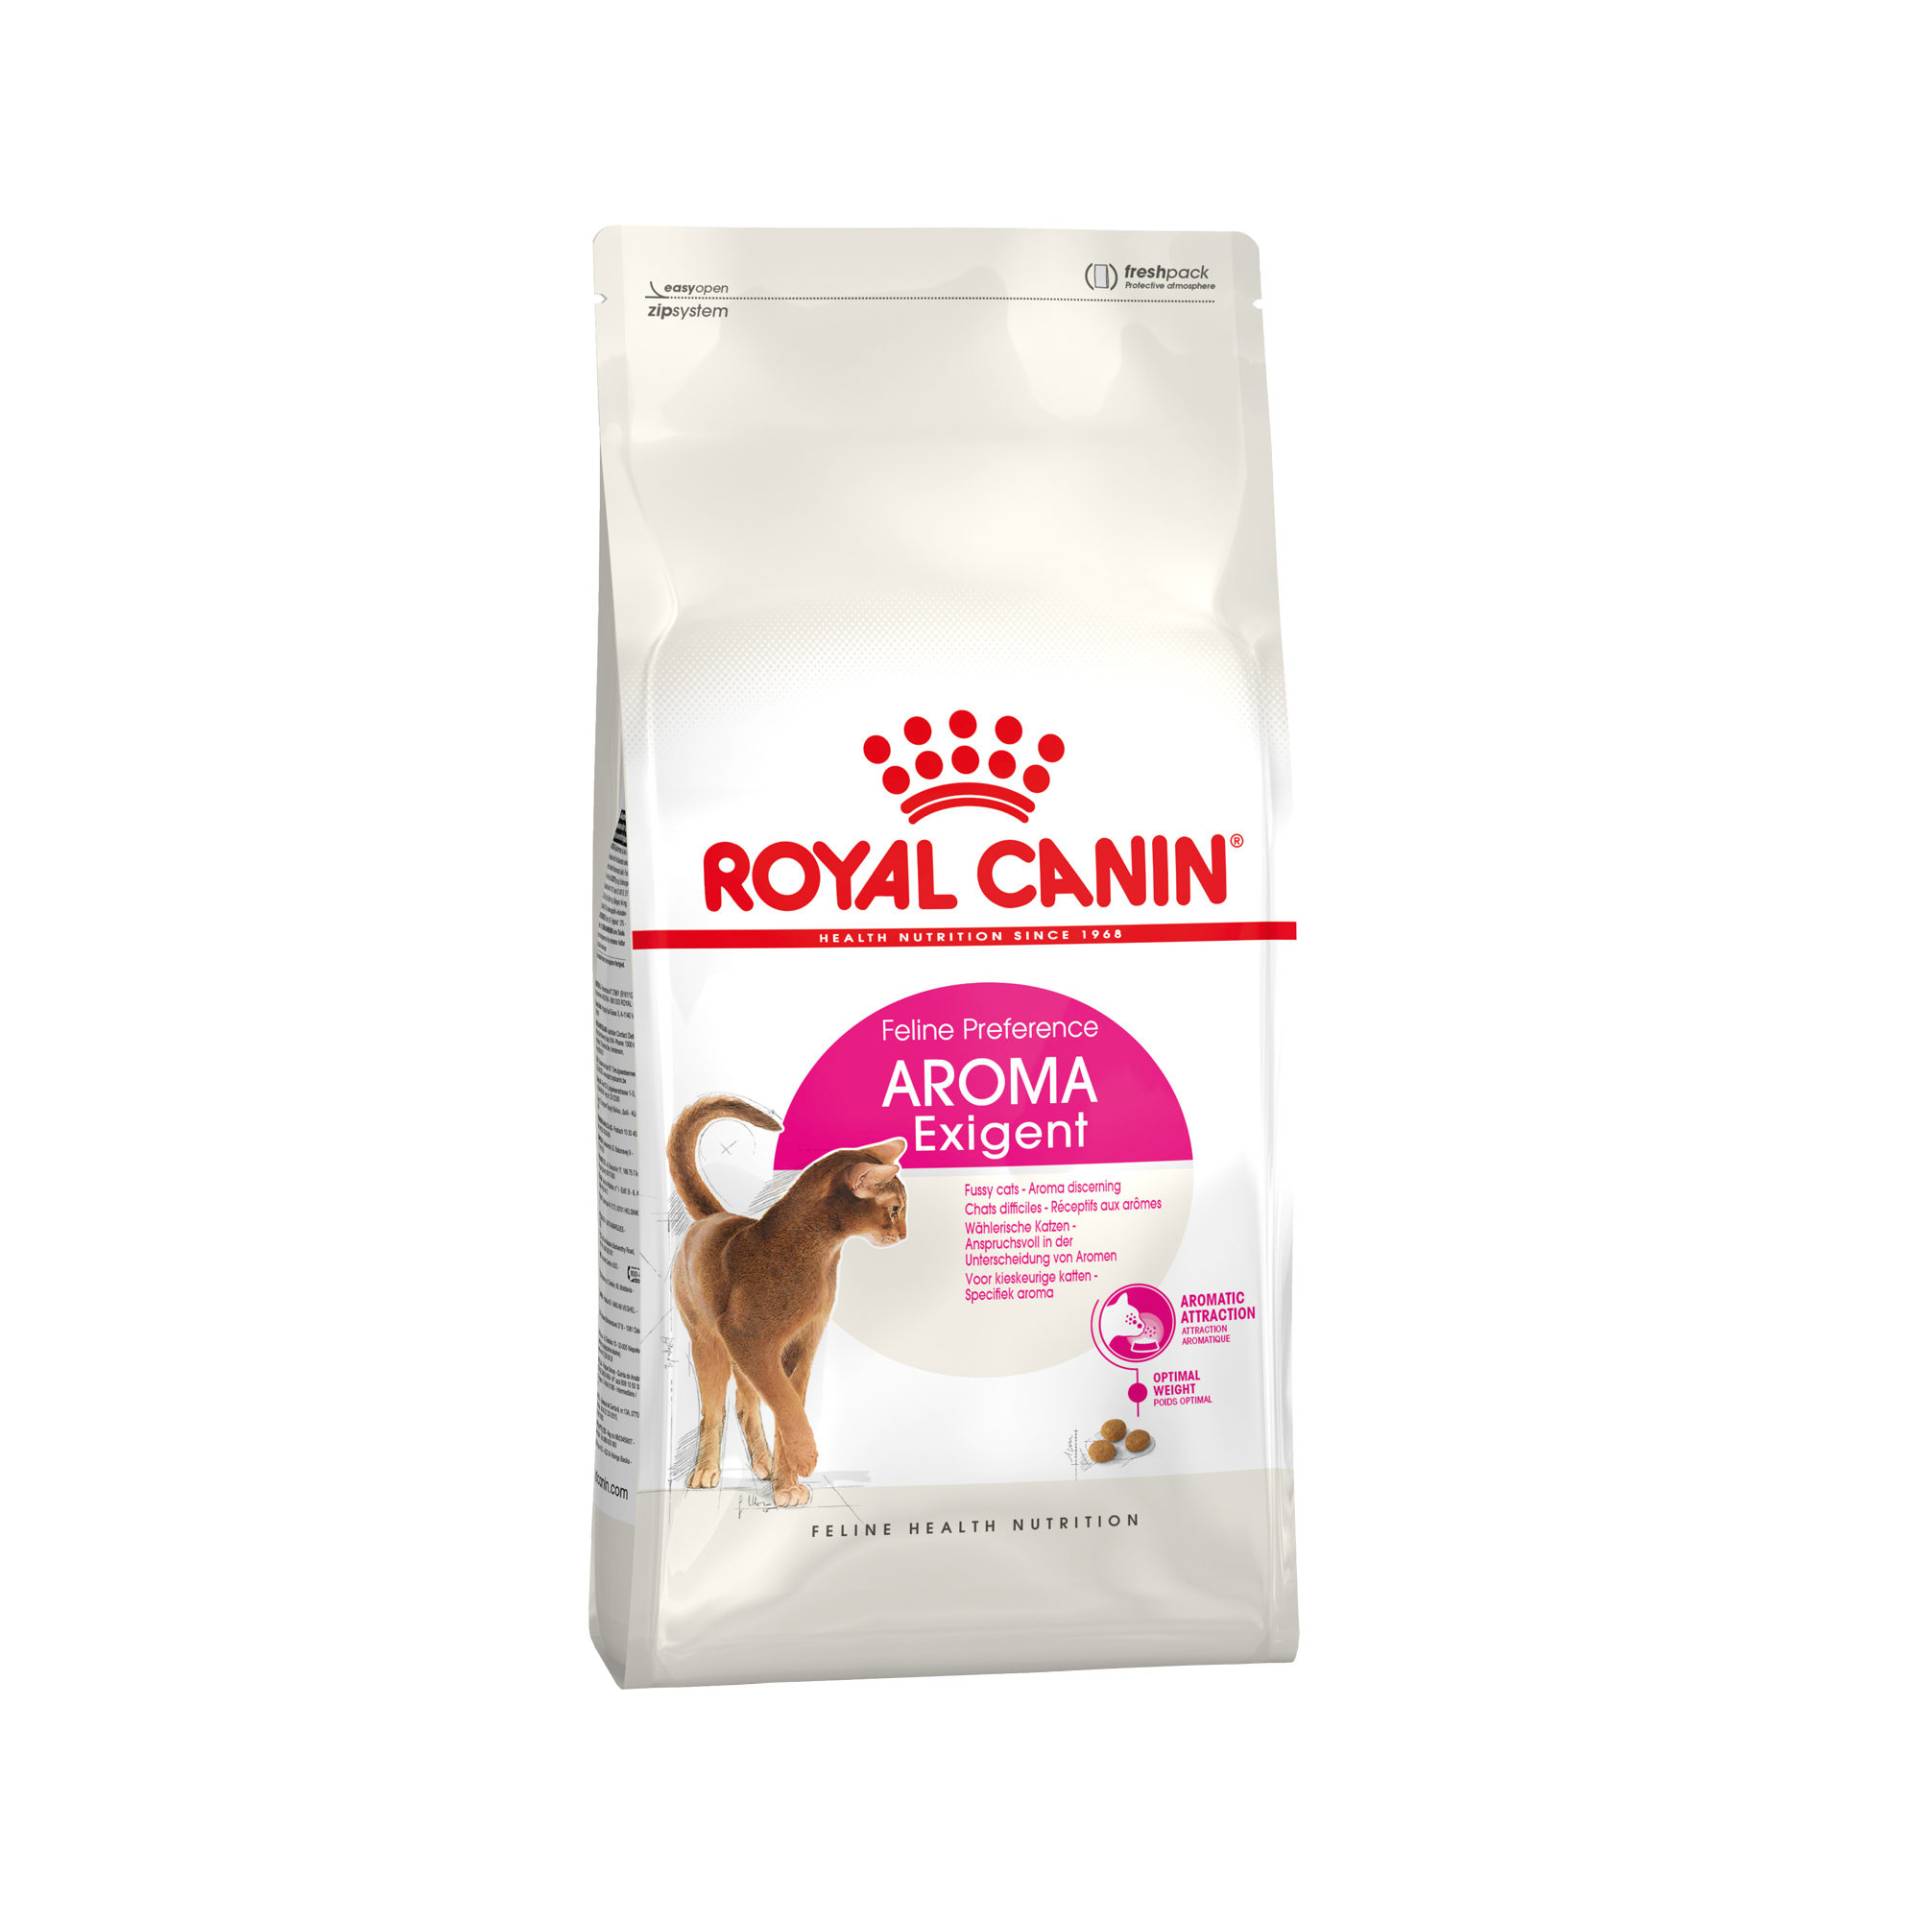 Royal Canin Aroma Exigent Katzenfutter - 10 kg von Royal Canin